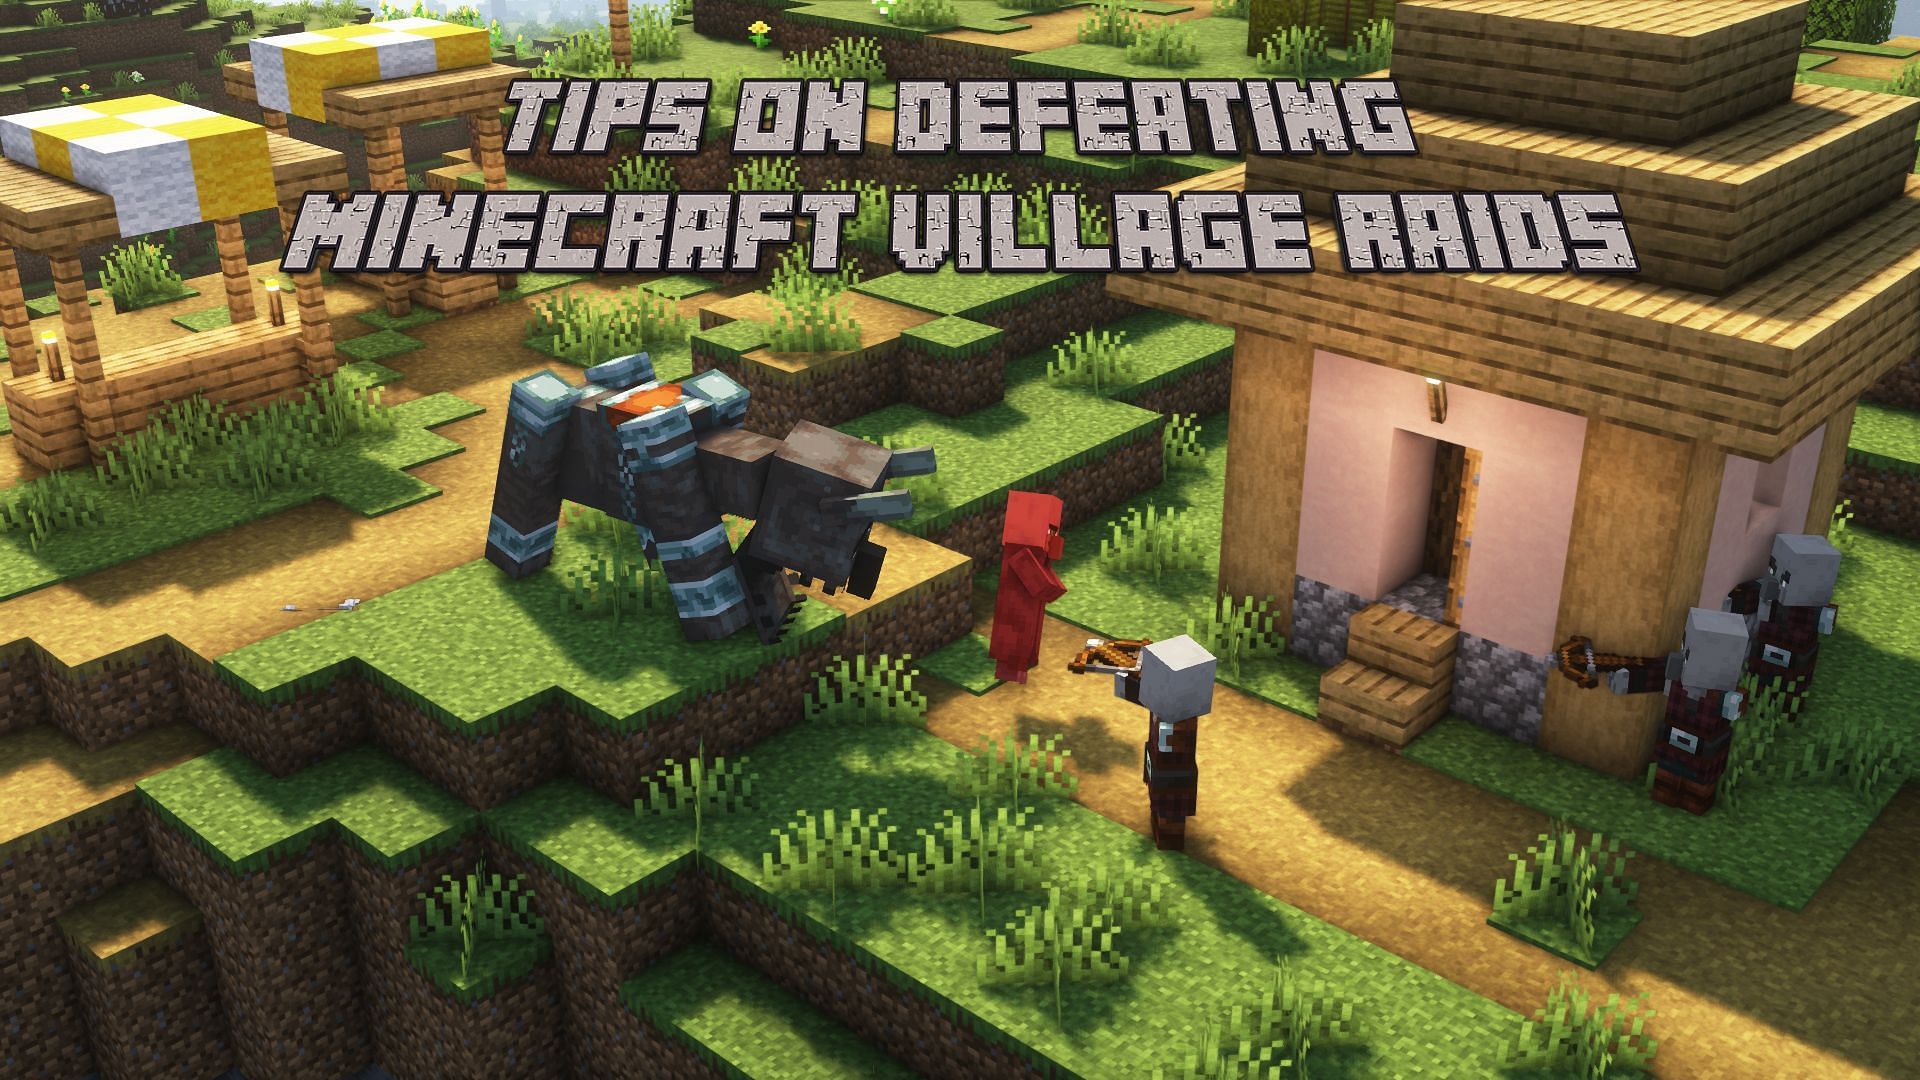 A village under a raid (Image via Mojang)